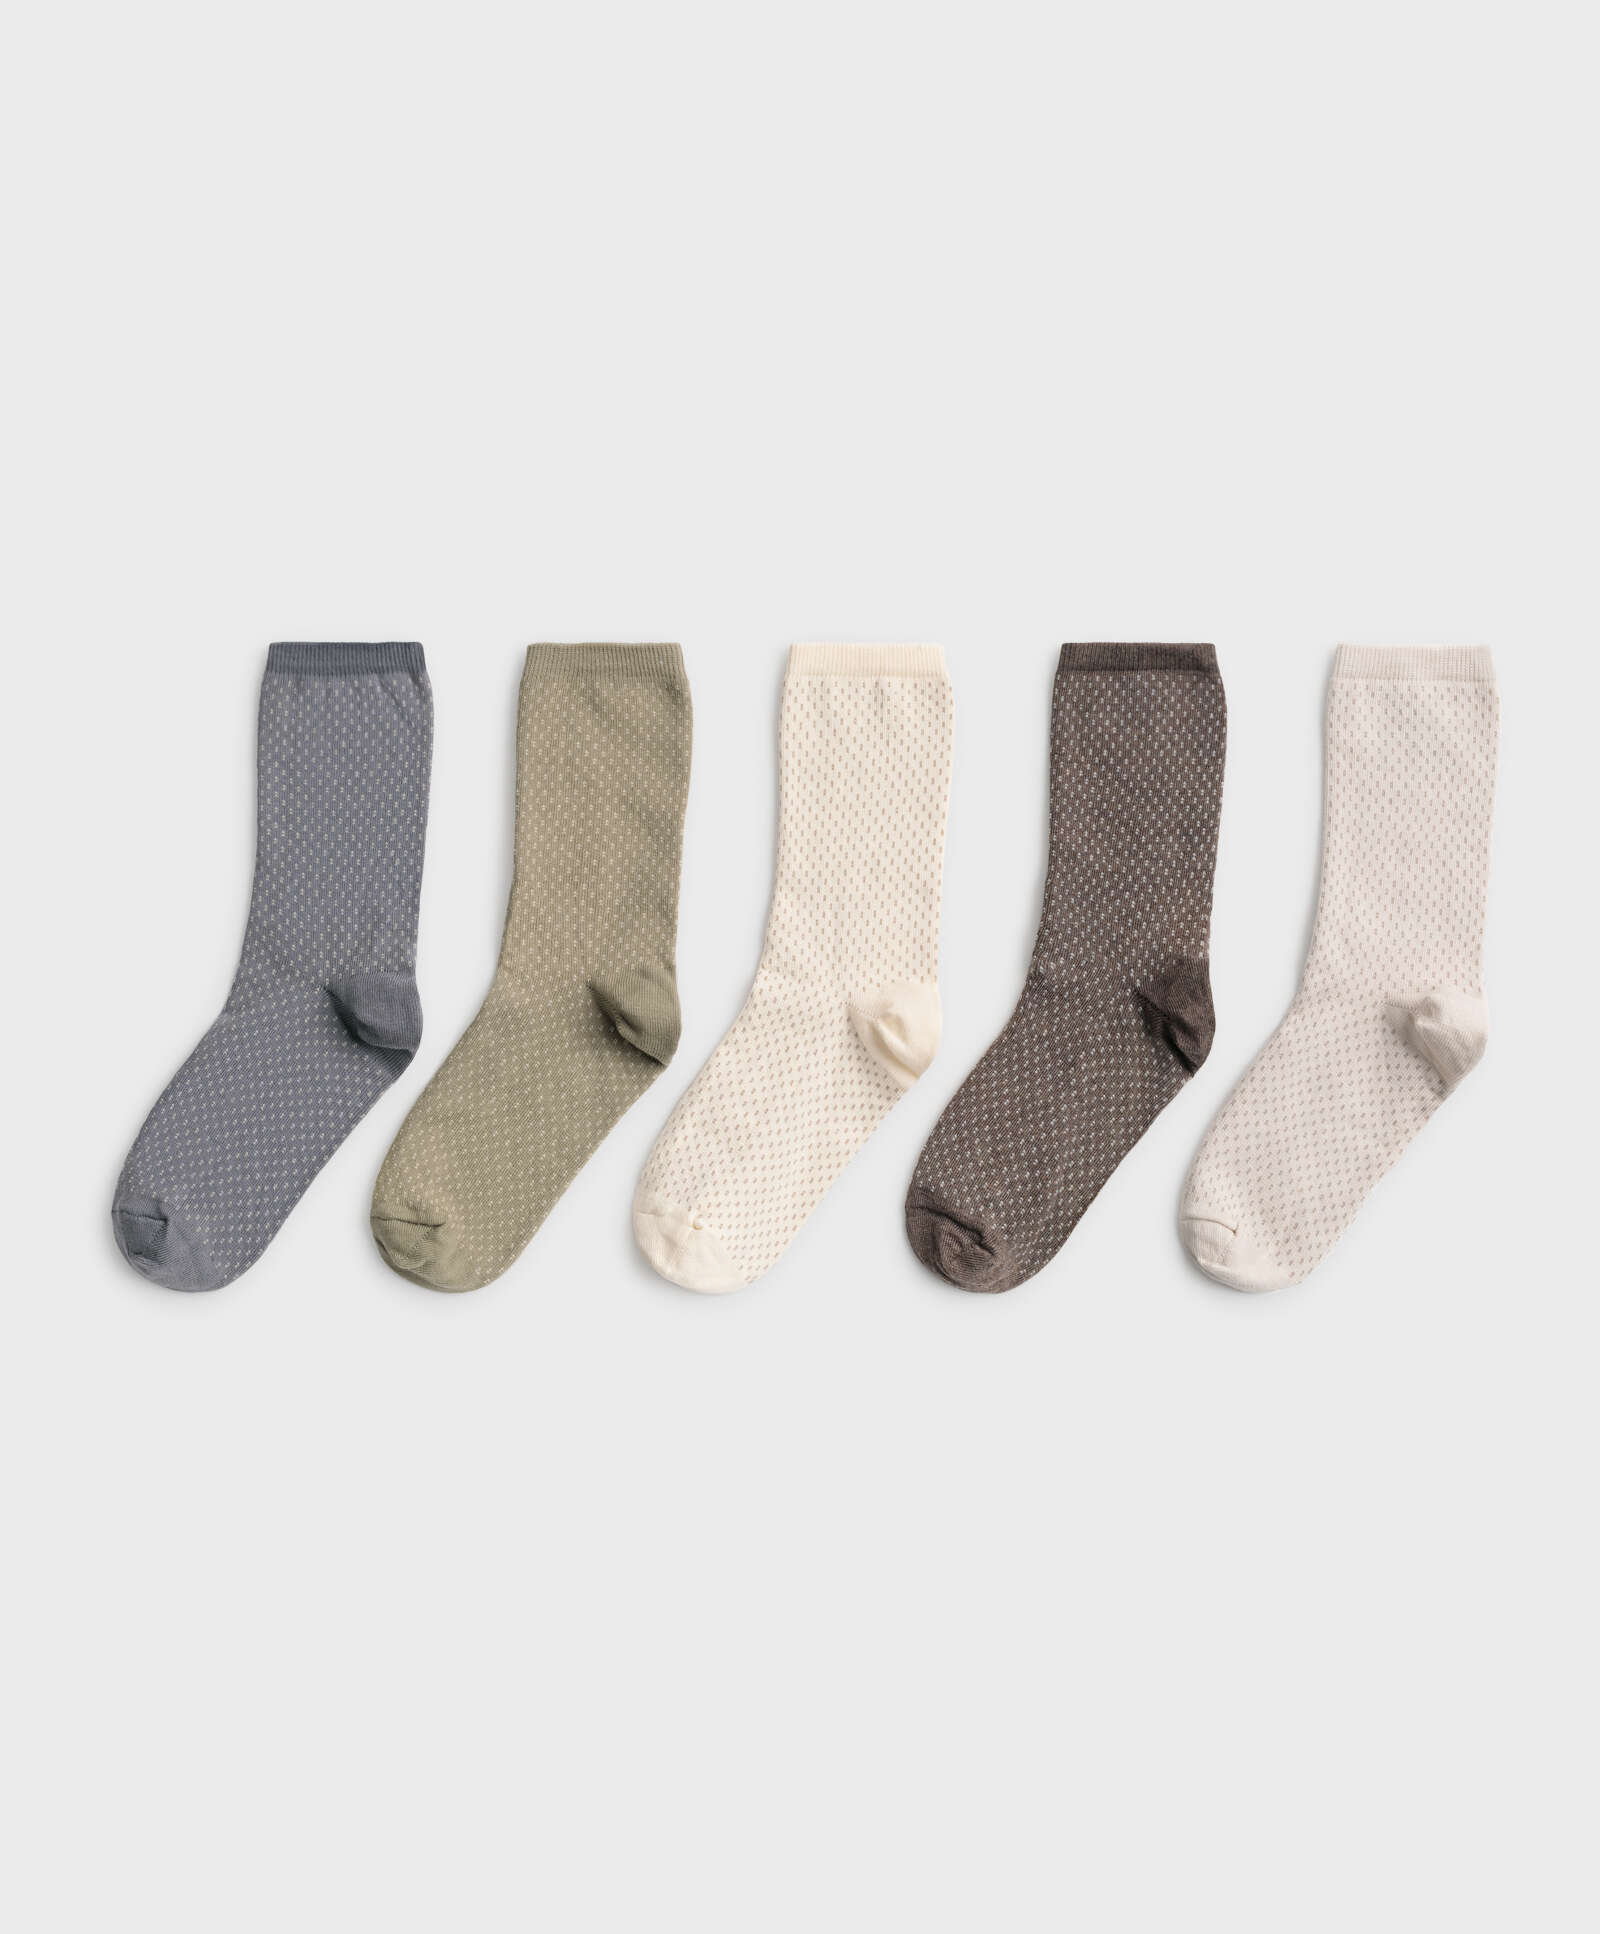 5 pairs of medium fantasy cotton socks